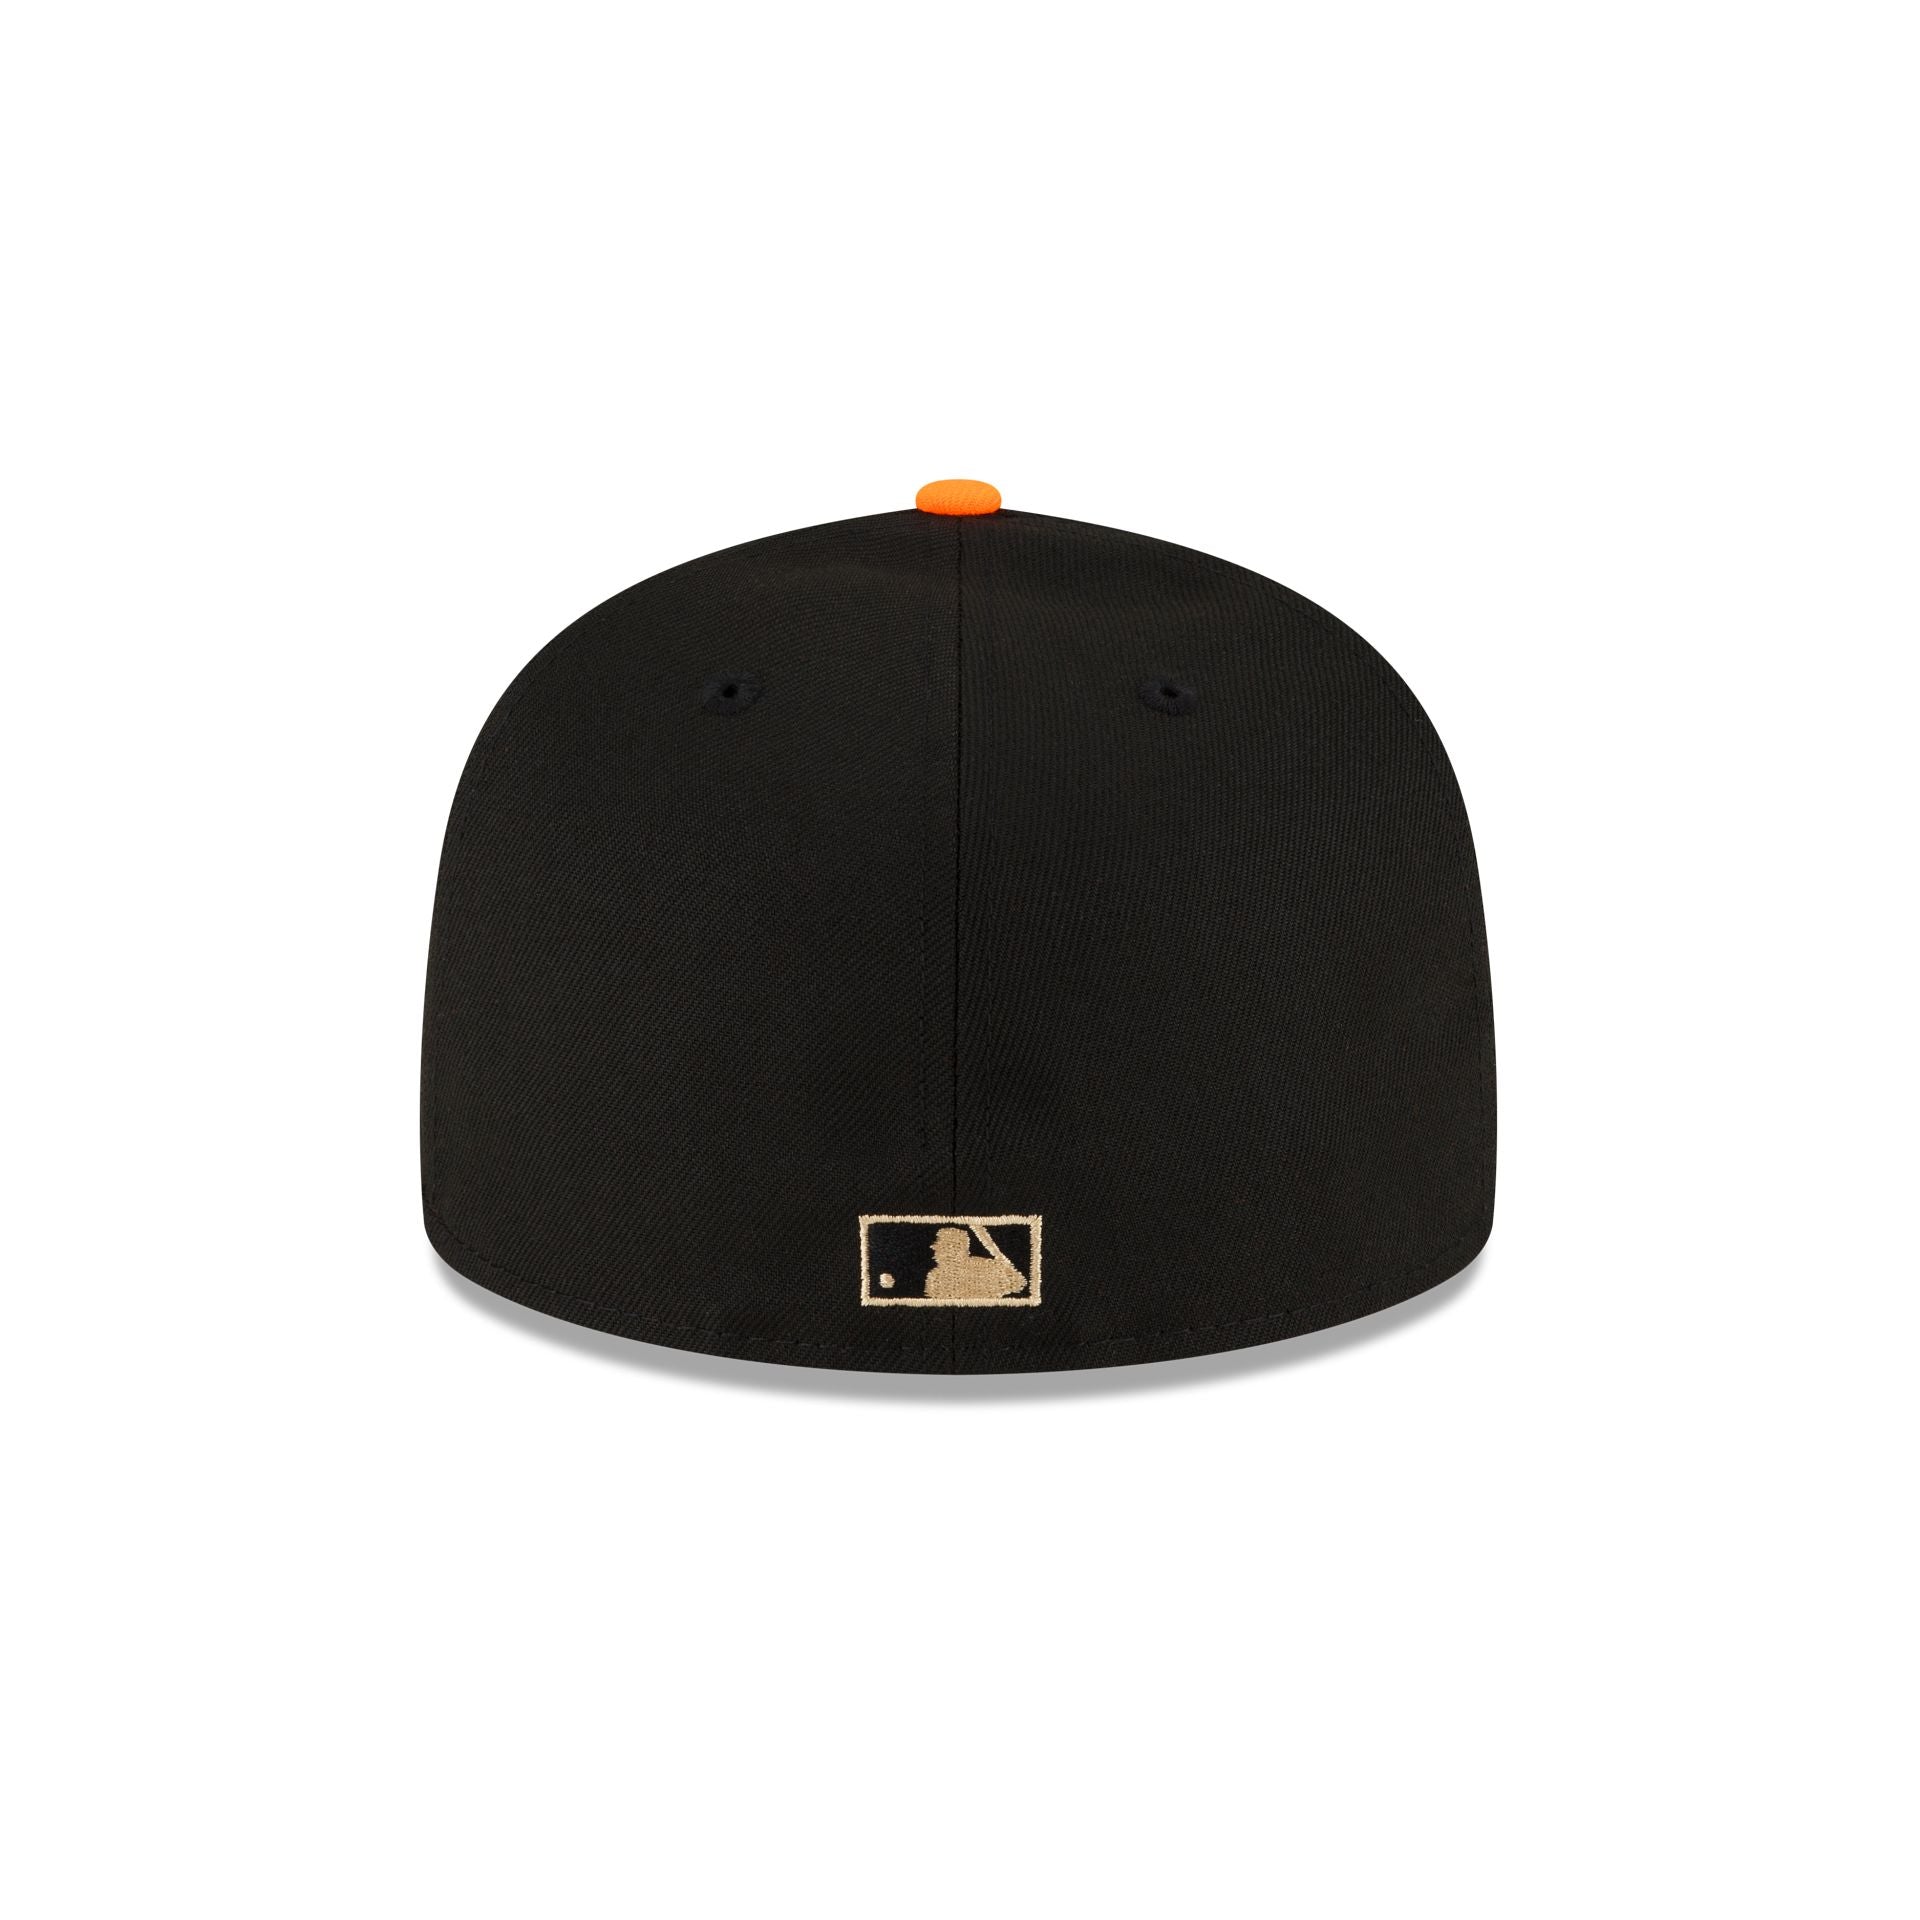 Just Caps Orange Visor Cap Yankees New Hat 59FIFTY New – York Era Fitted